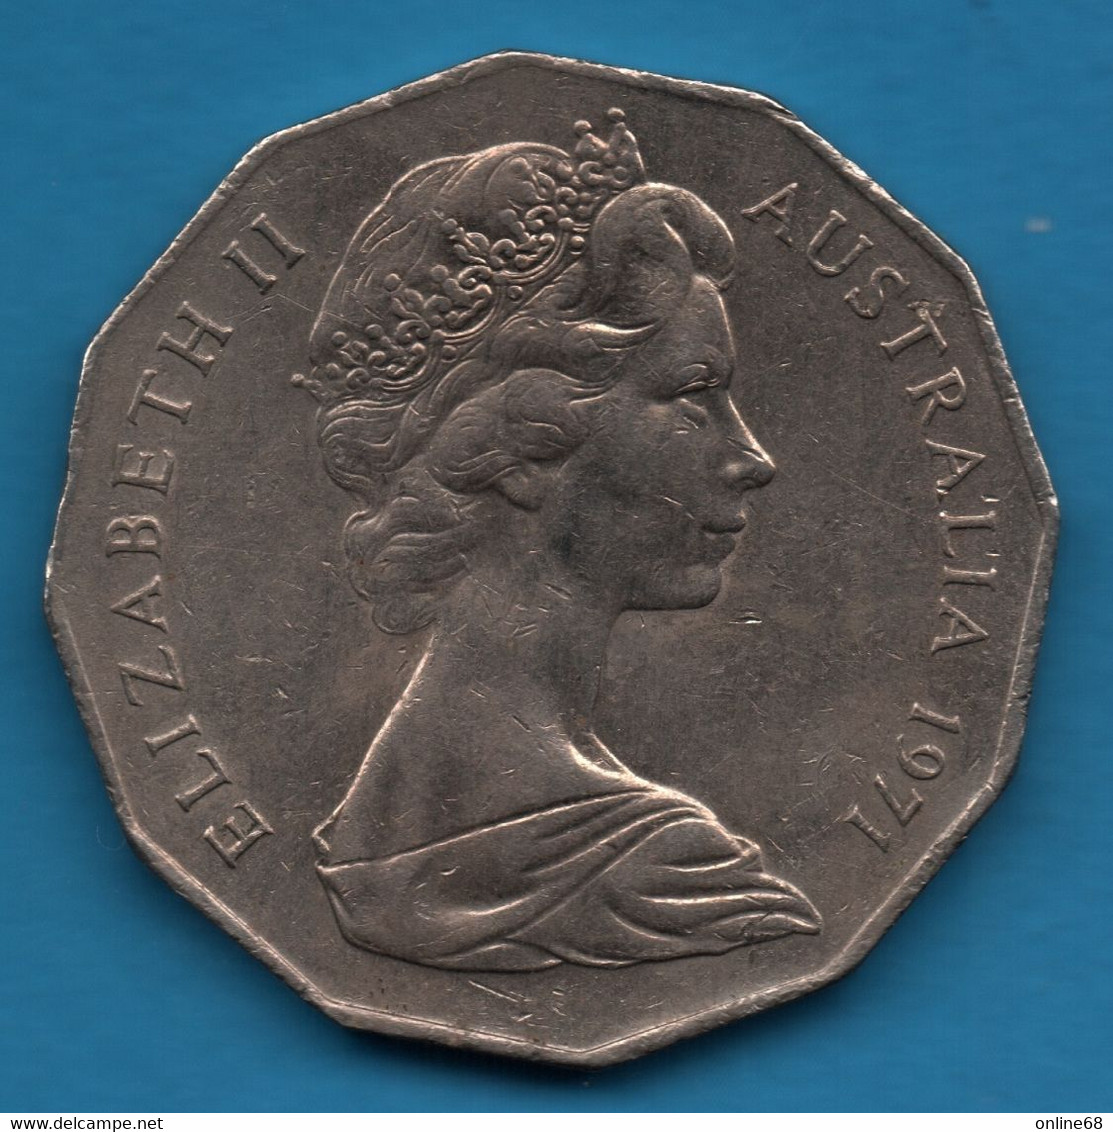 AUSTRALIA 50 CENTS 1971 KM# 68 Elizabeth II - 50 Cents